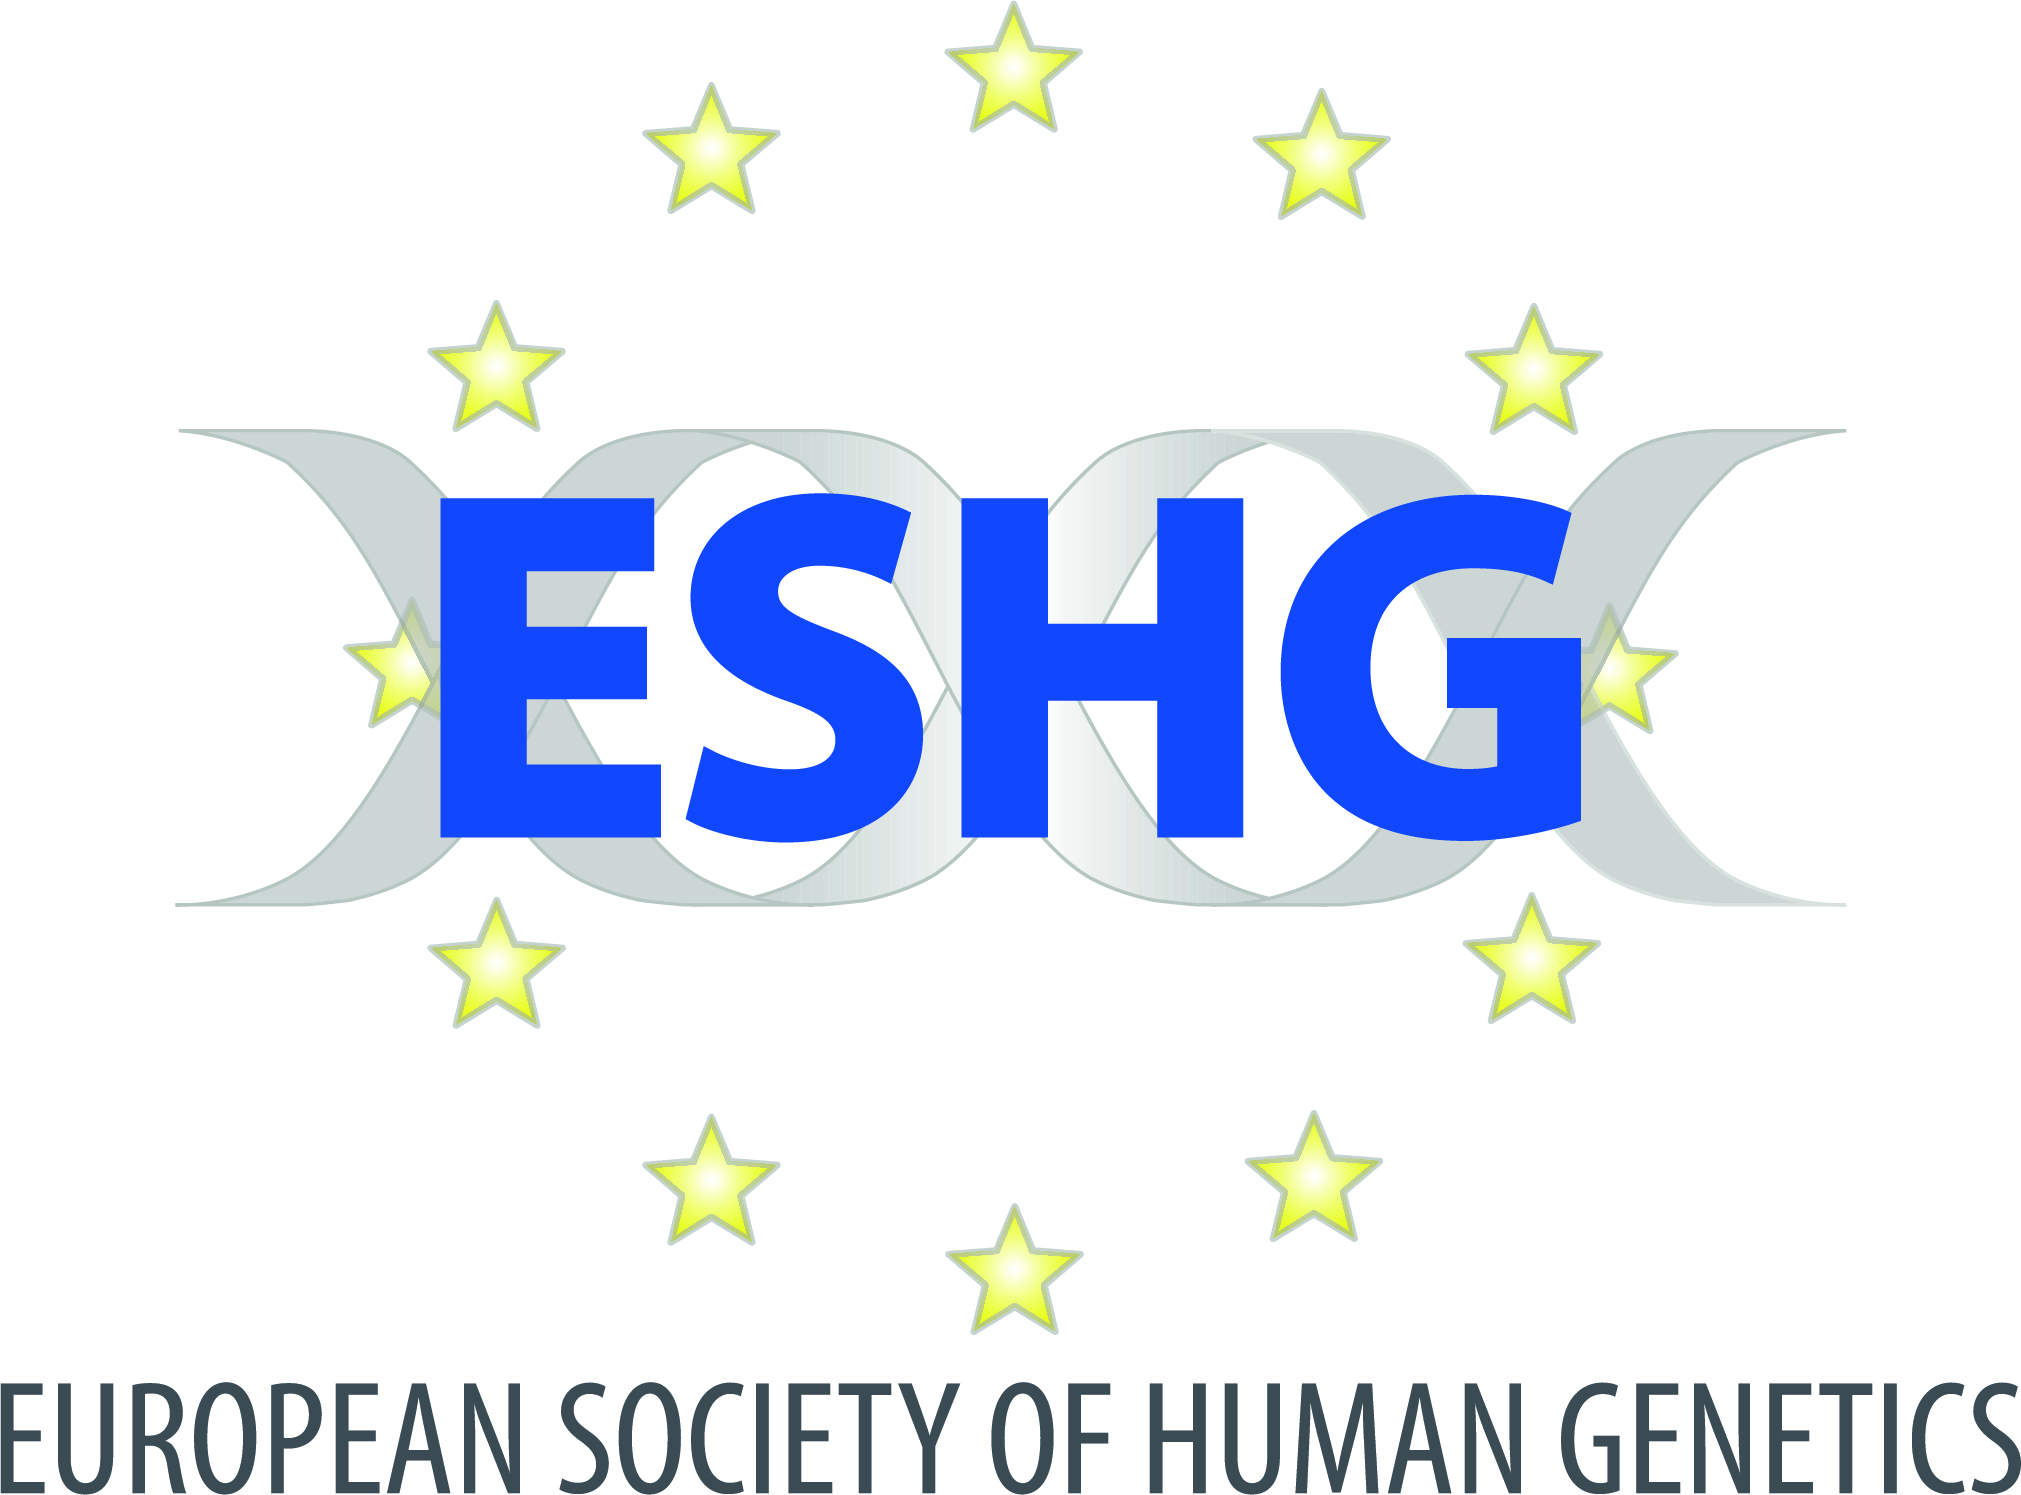 European Human Genetics Conference - ESHG